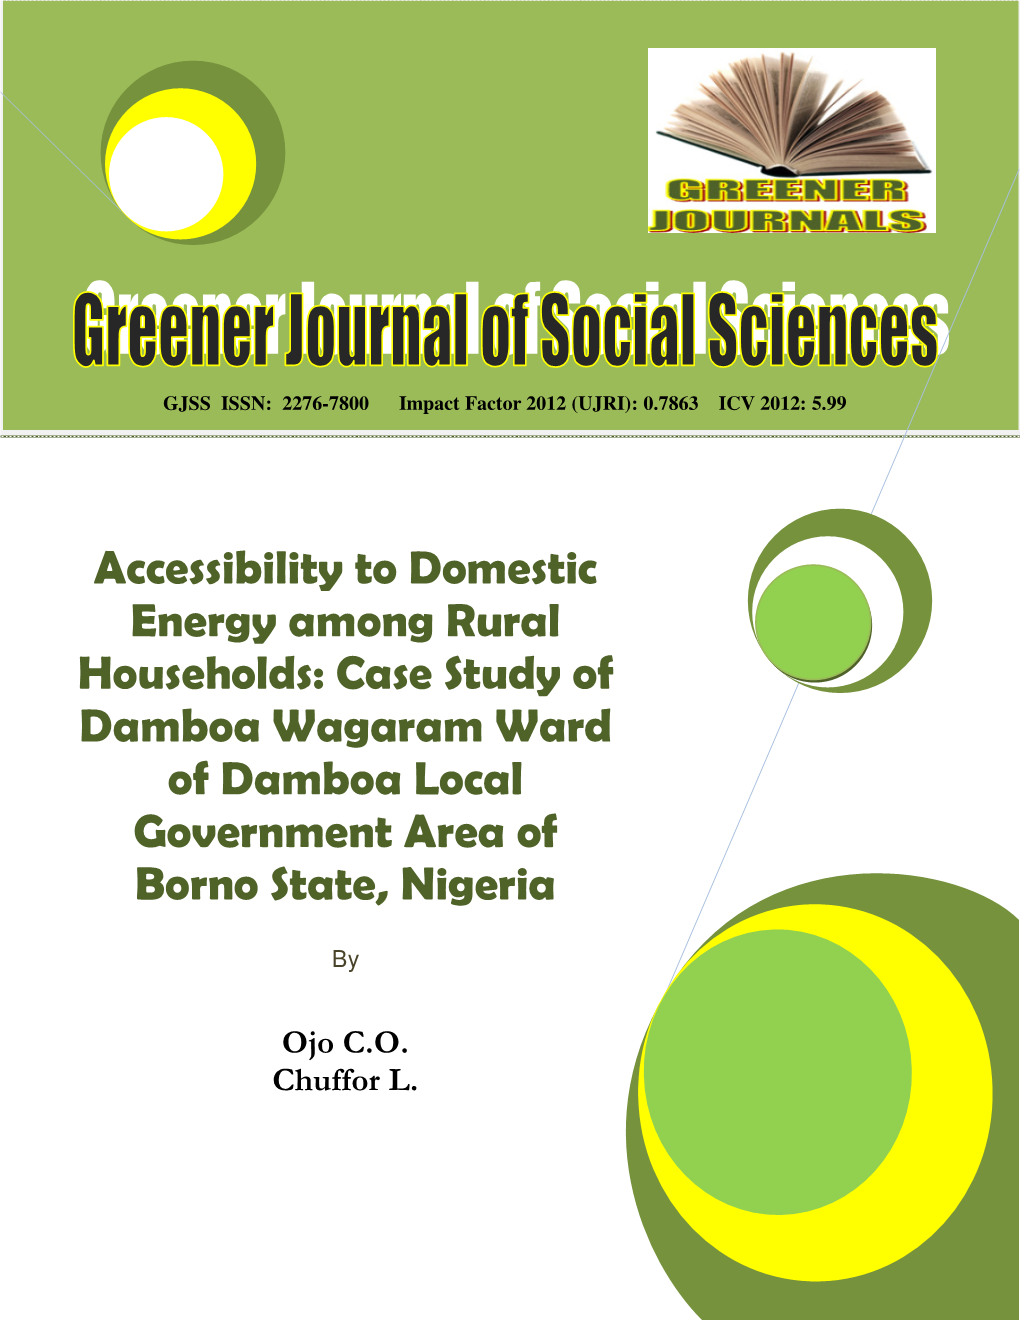 Accessibility to Domestic Energy Among Rural Households: Case Study of Damboa Wagaram Ward of Damboa Local Government Area of Borno State, Nigeria